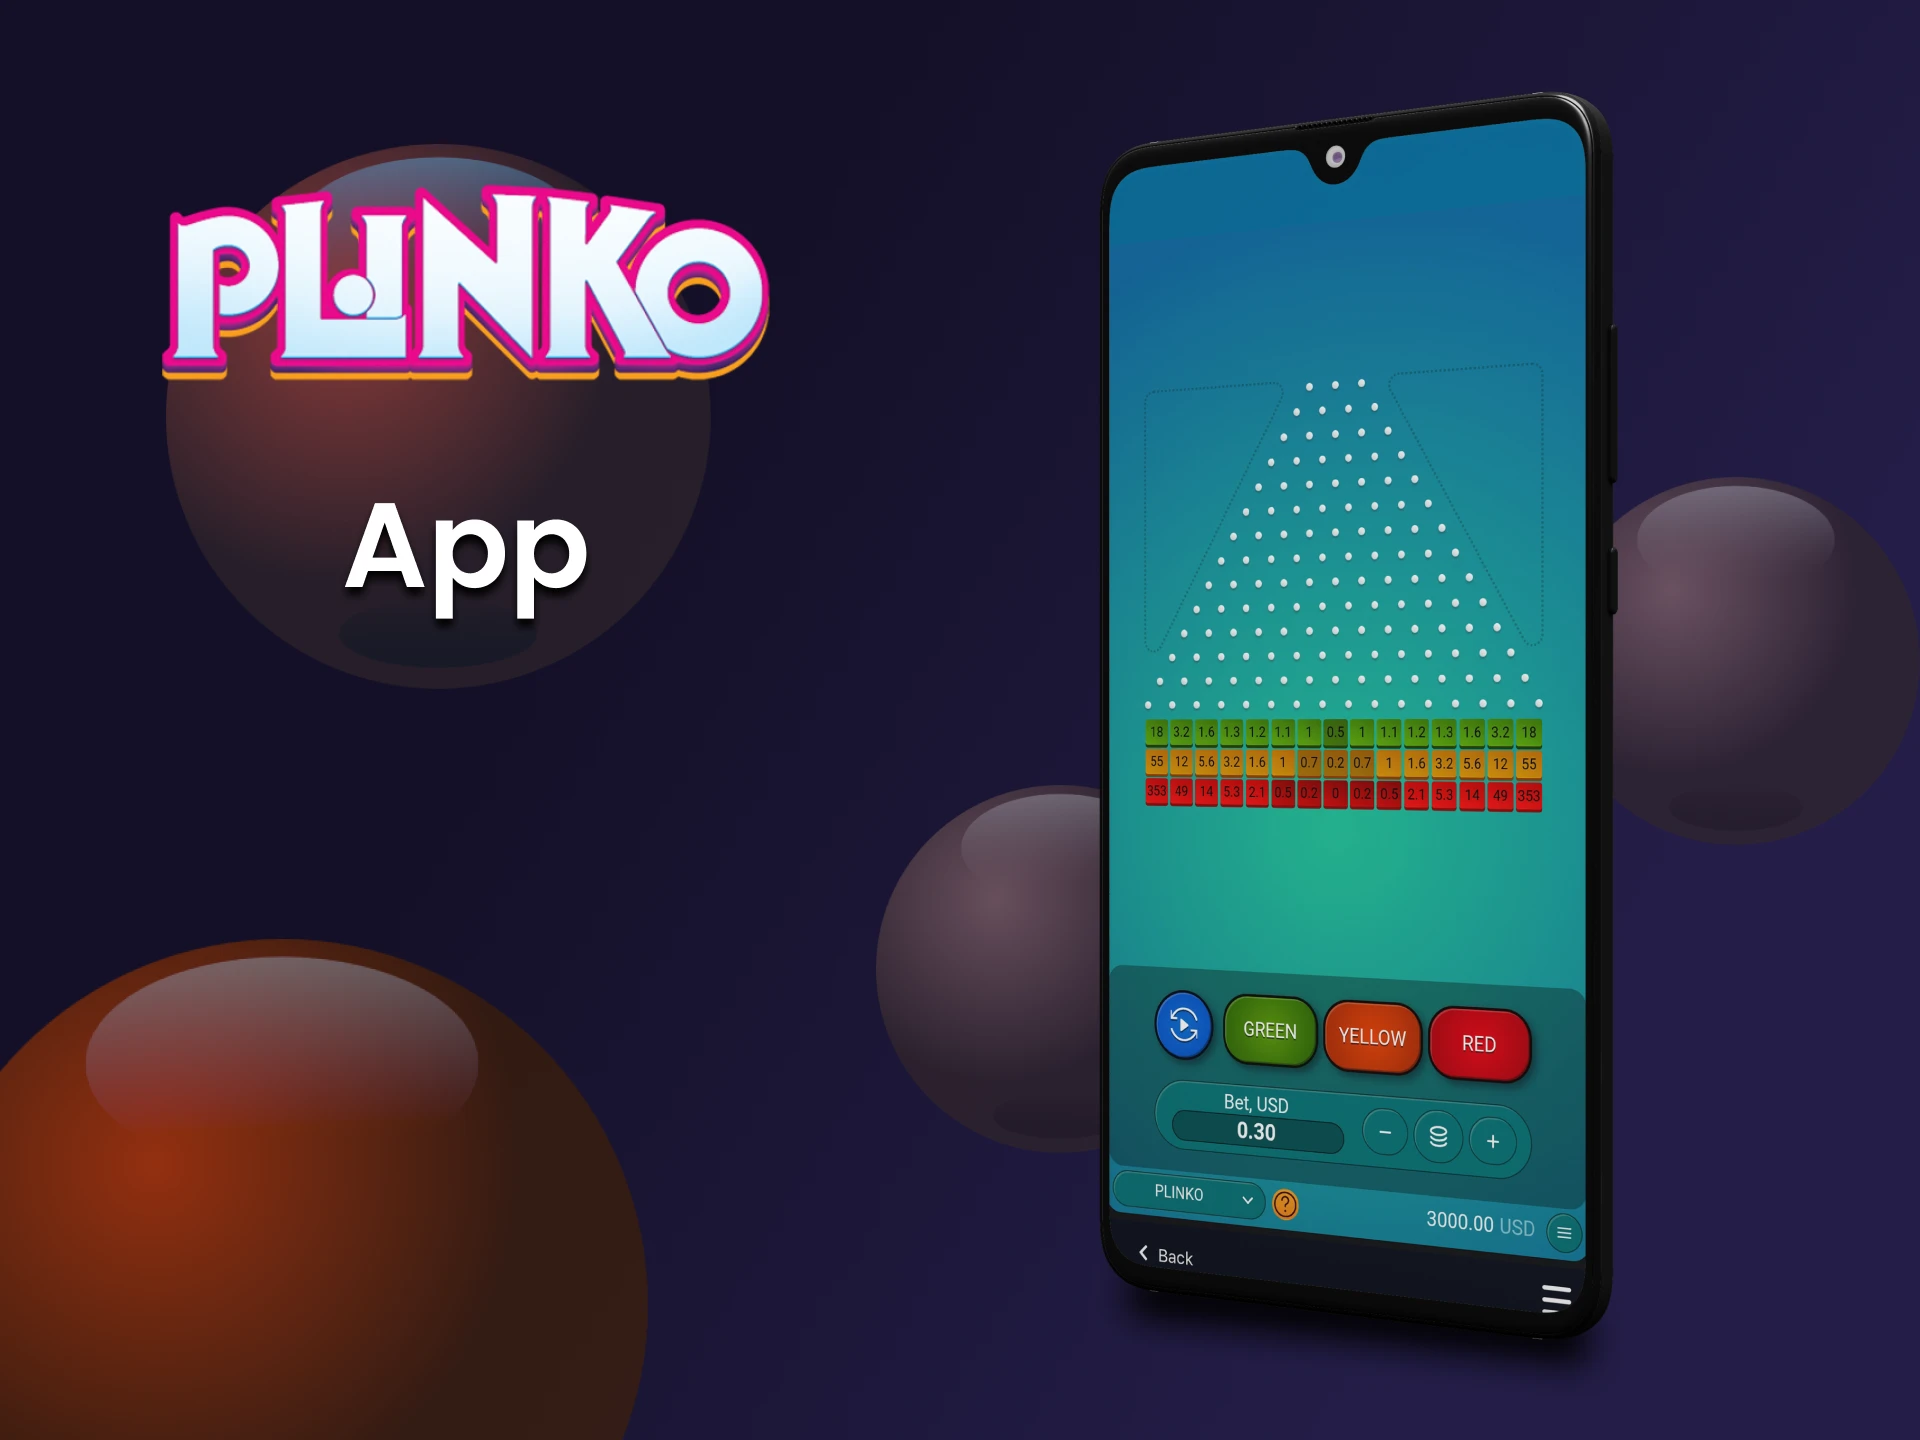 Play Plinko through the app on your smartphone.